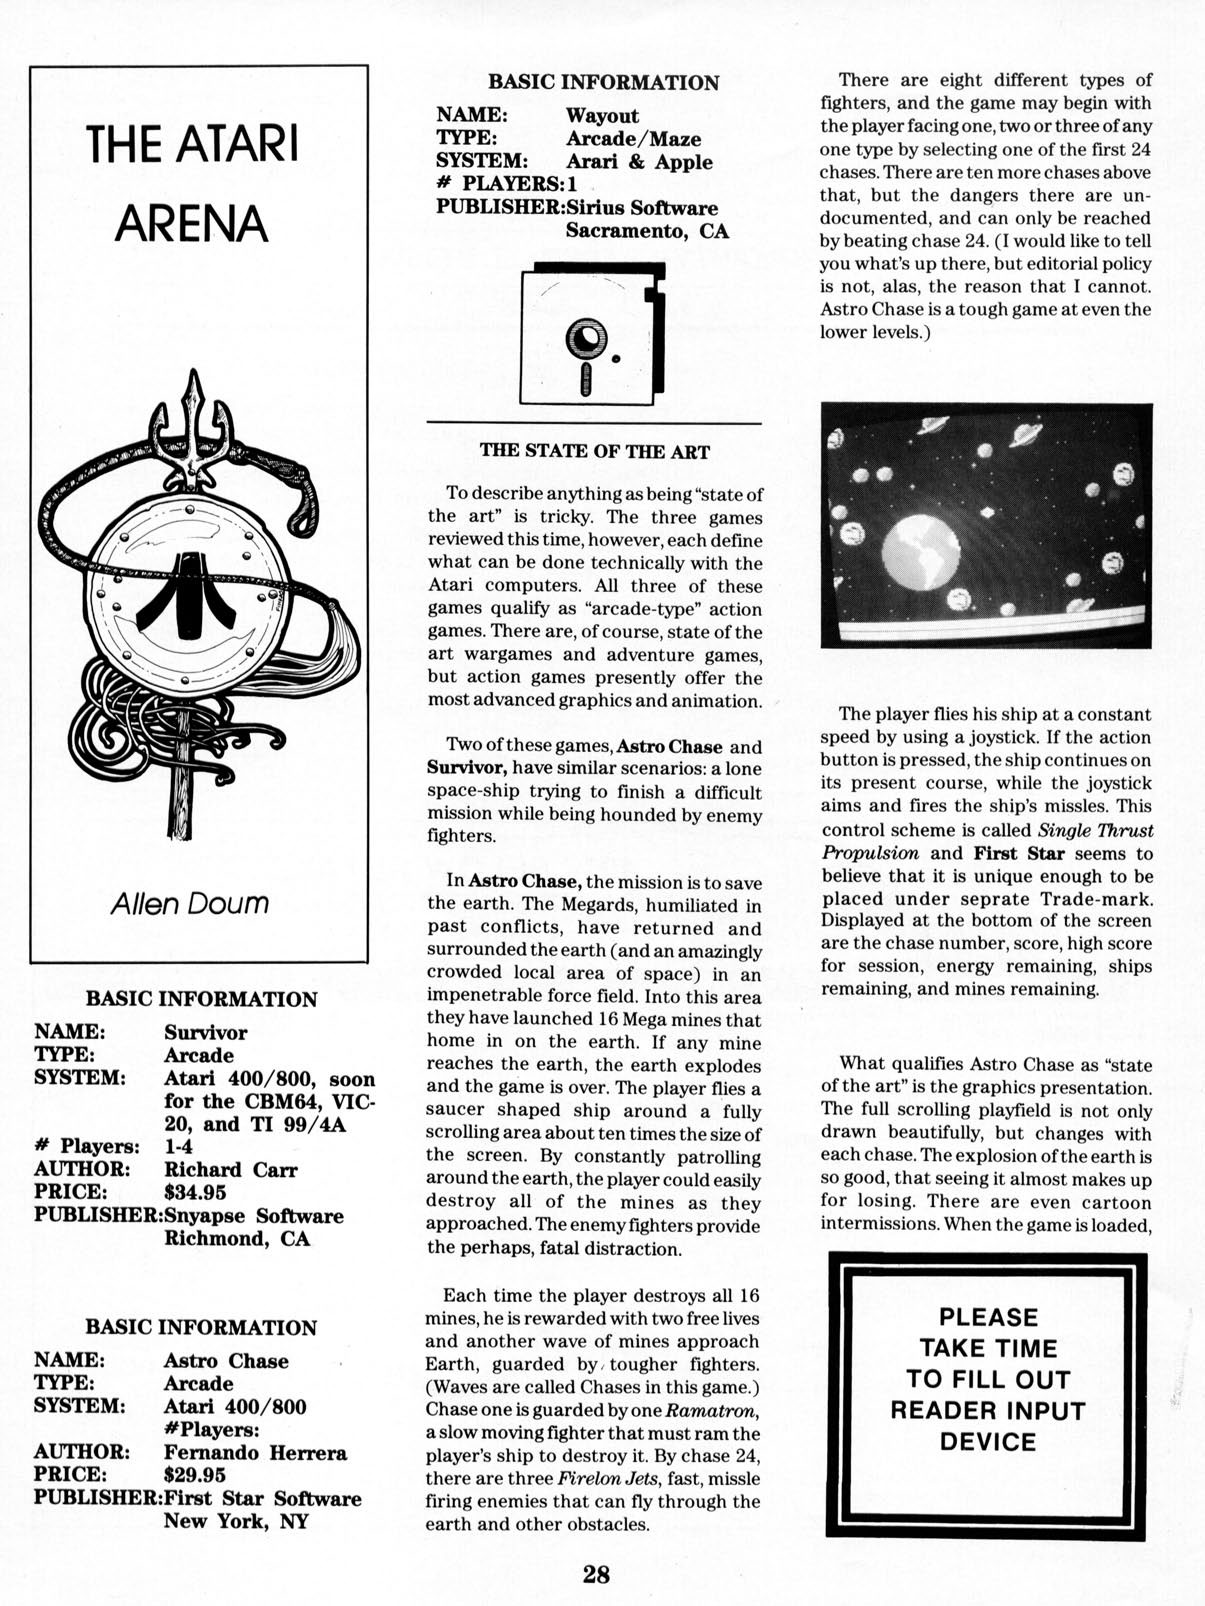 The Atari Arena